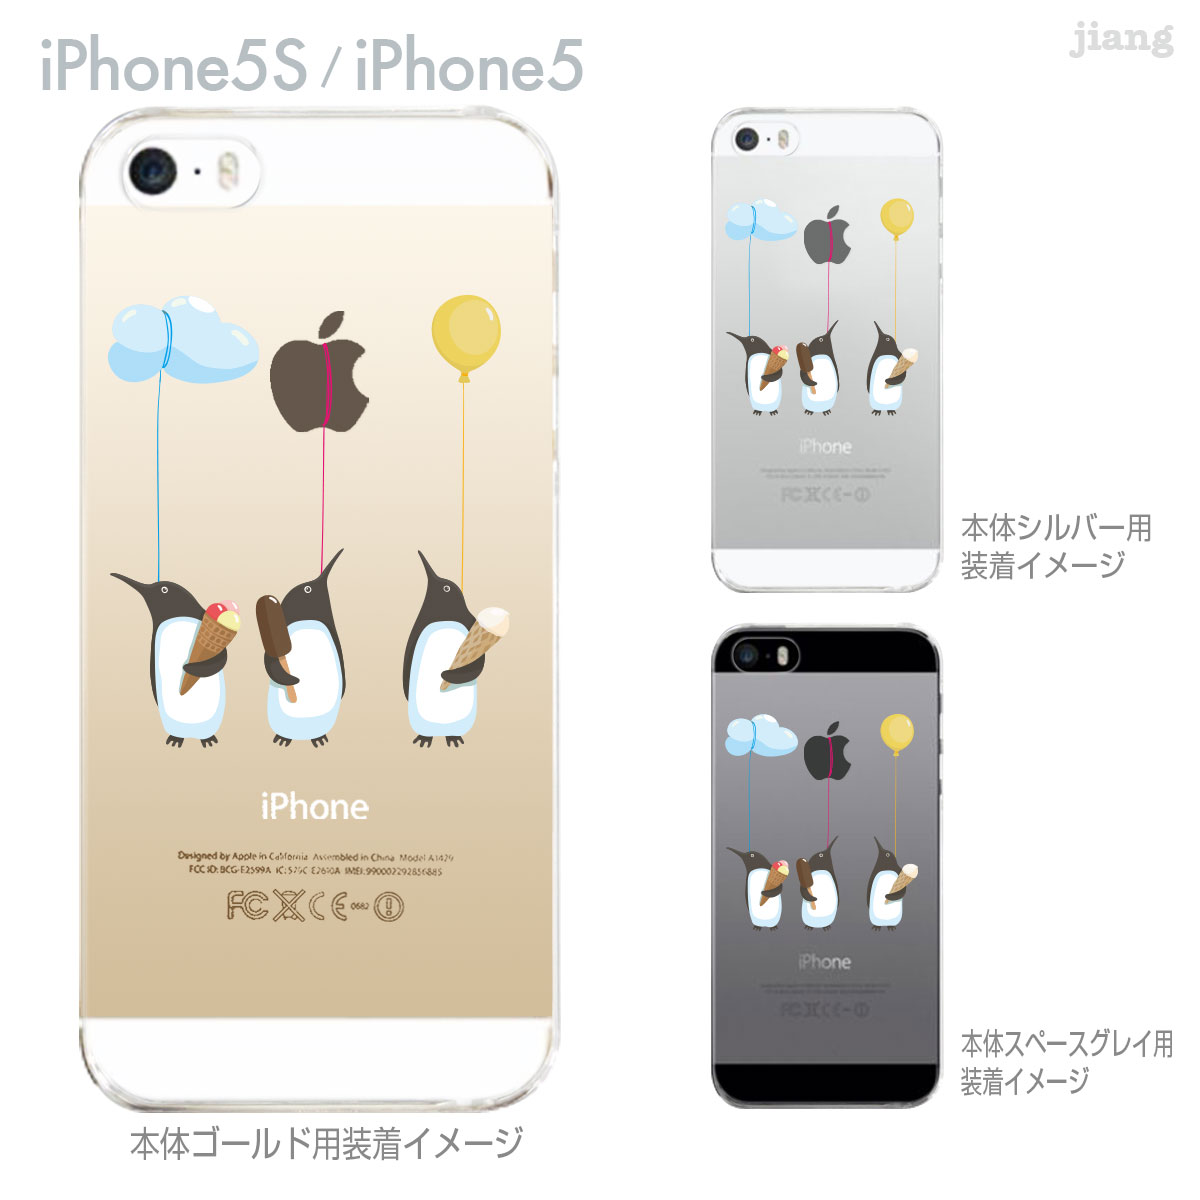 iPhone5sカバー 上品 iPhone5カバー スマホカバー スマートフォン iPhone5s iPhone5 Clear Arts iPhone5sケース iPhone5ケース アイスクリーム ケース スマホケース クリアーアーツ クリアケース カバー 01-ip5s-zes065 価格交渉OK送料無料 ペンギン 風船